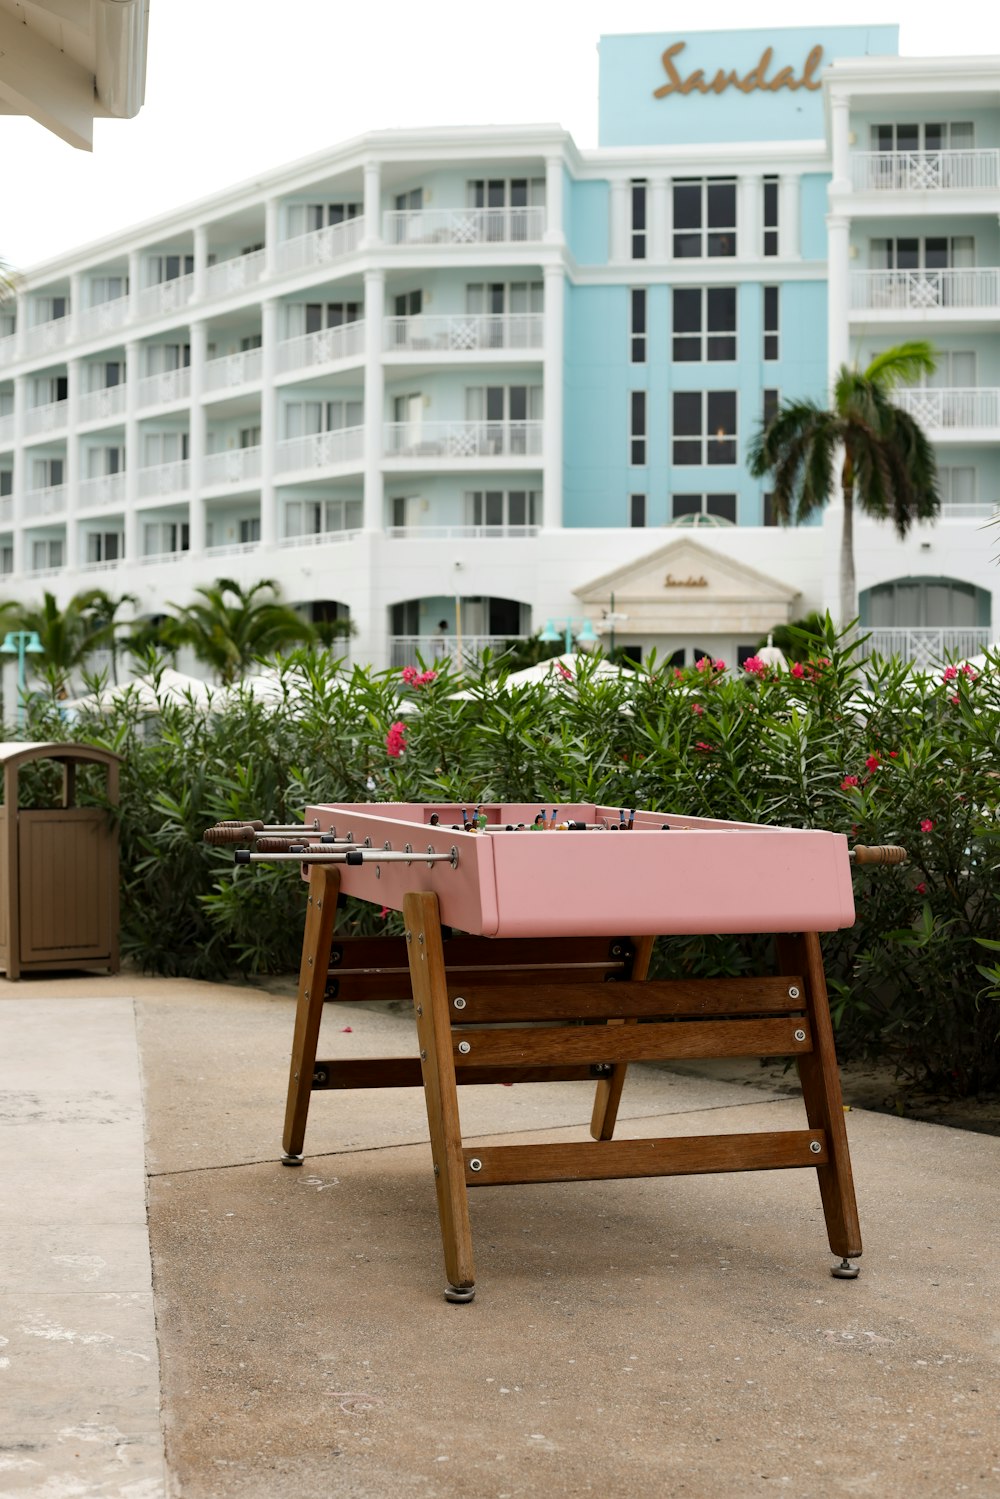 Un banco rosa sentado frente a un hotel